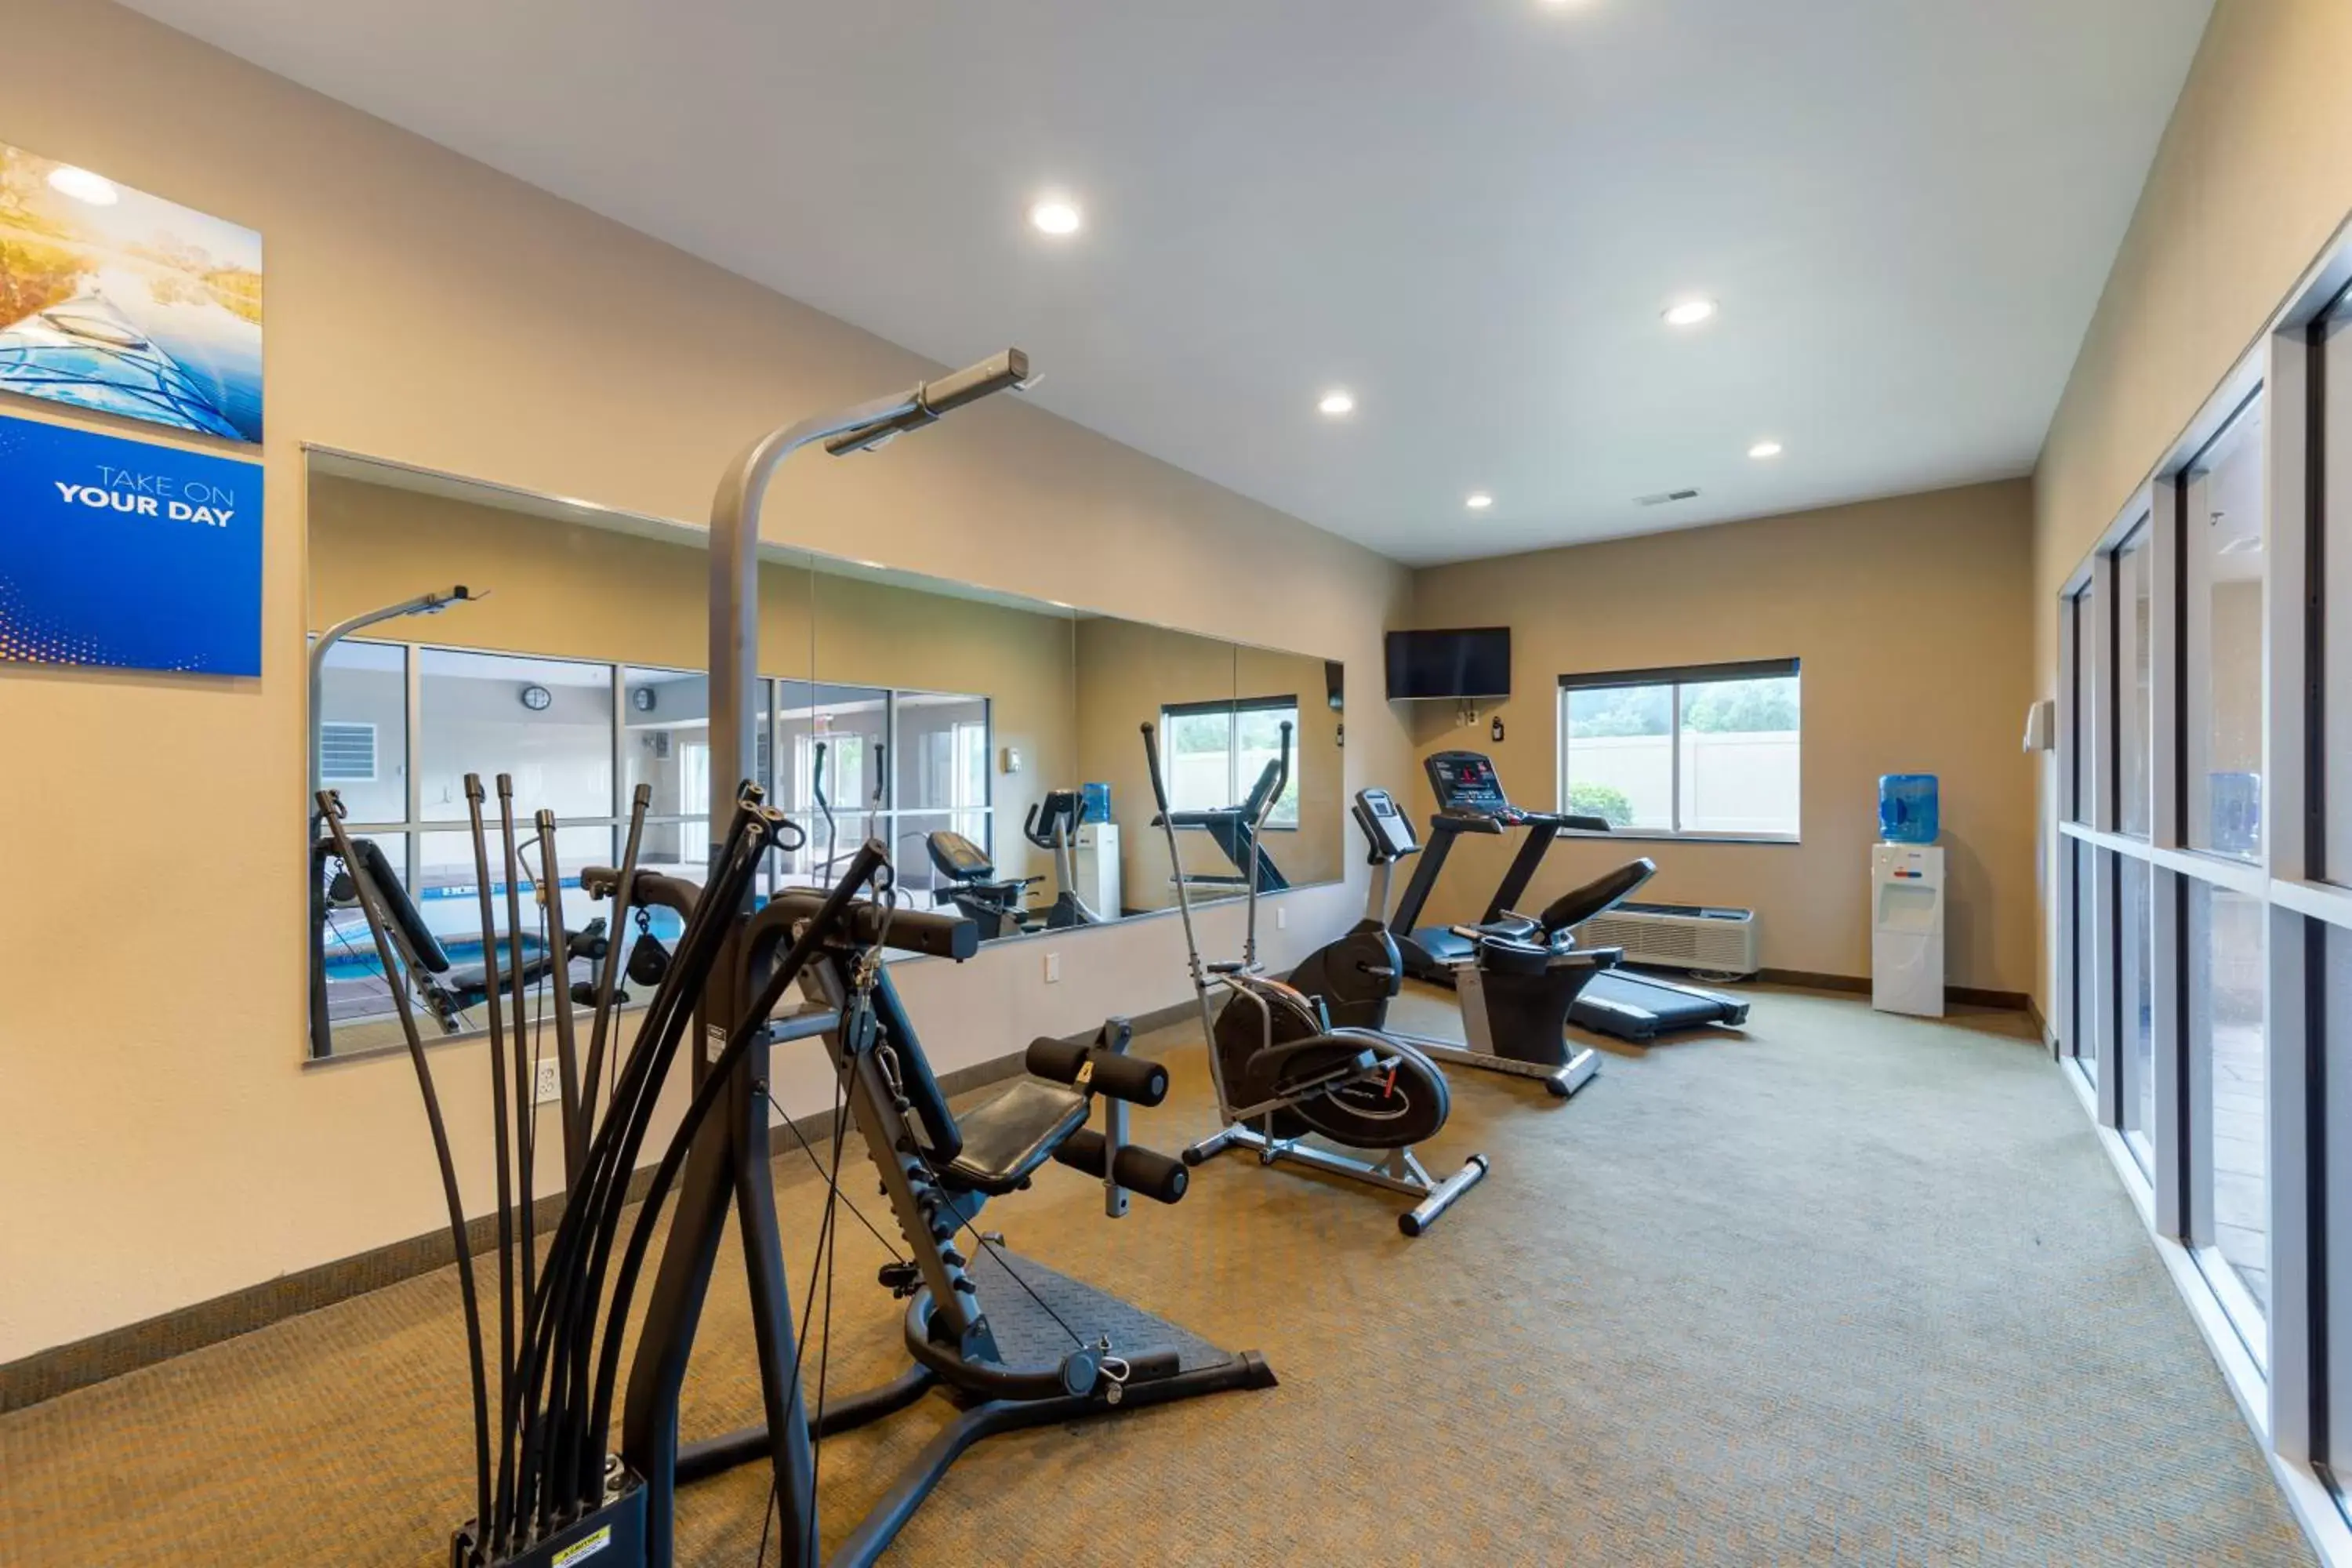 Fitness centre/facilities, Fitness Center/Facilities in Comfort Inn Huntsville near University